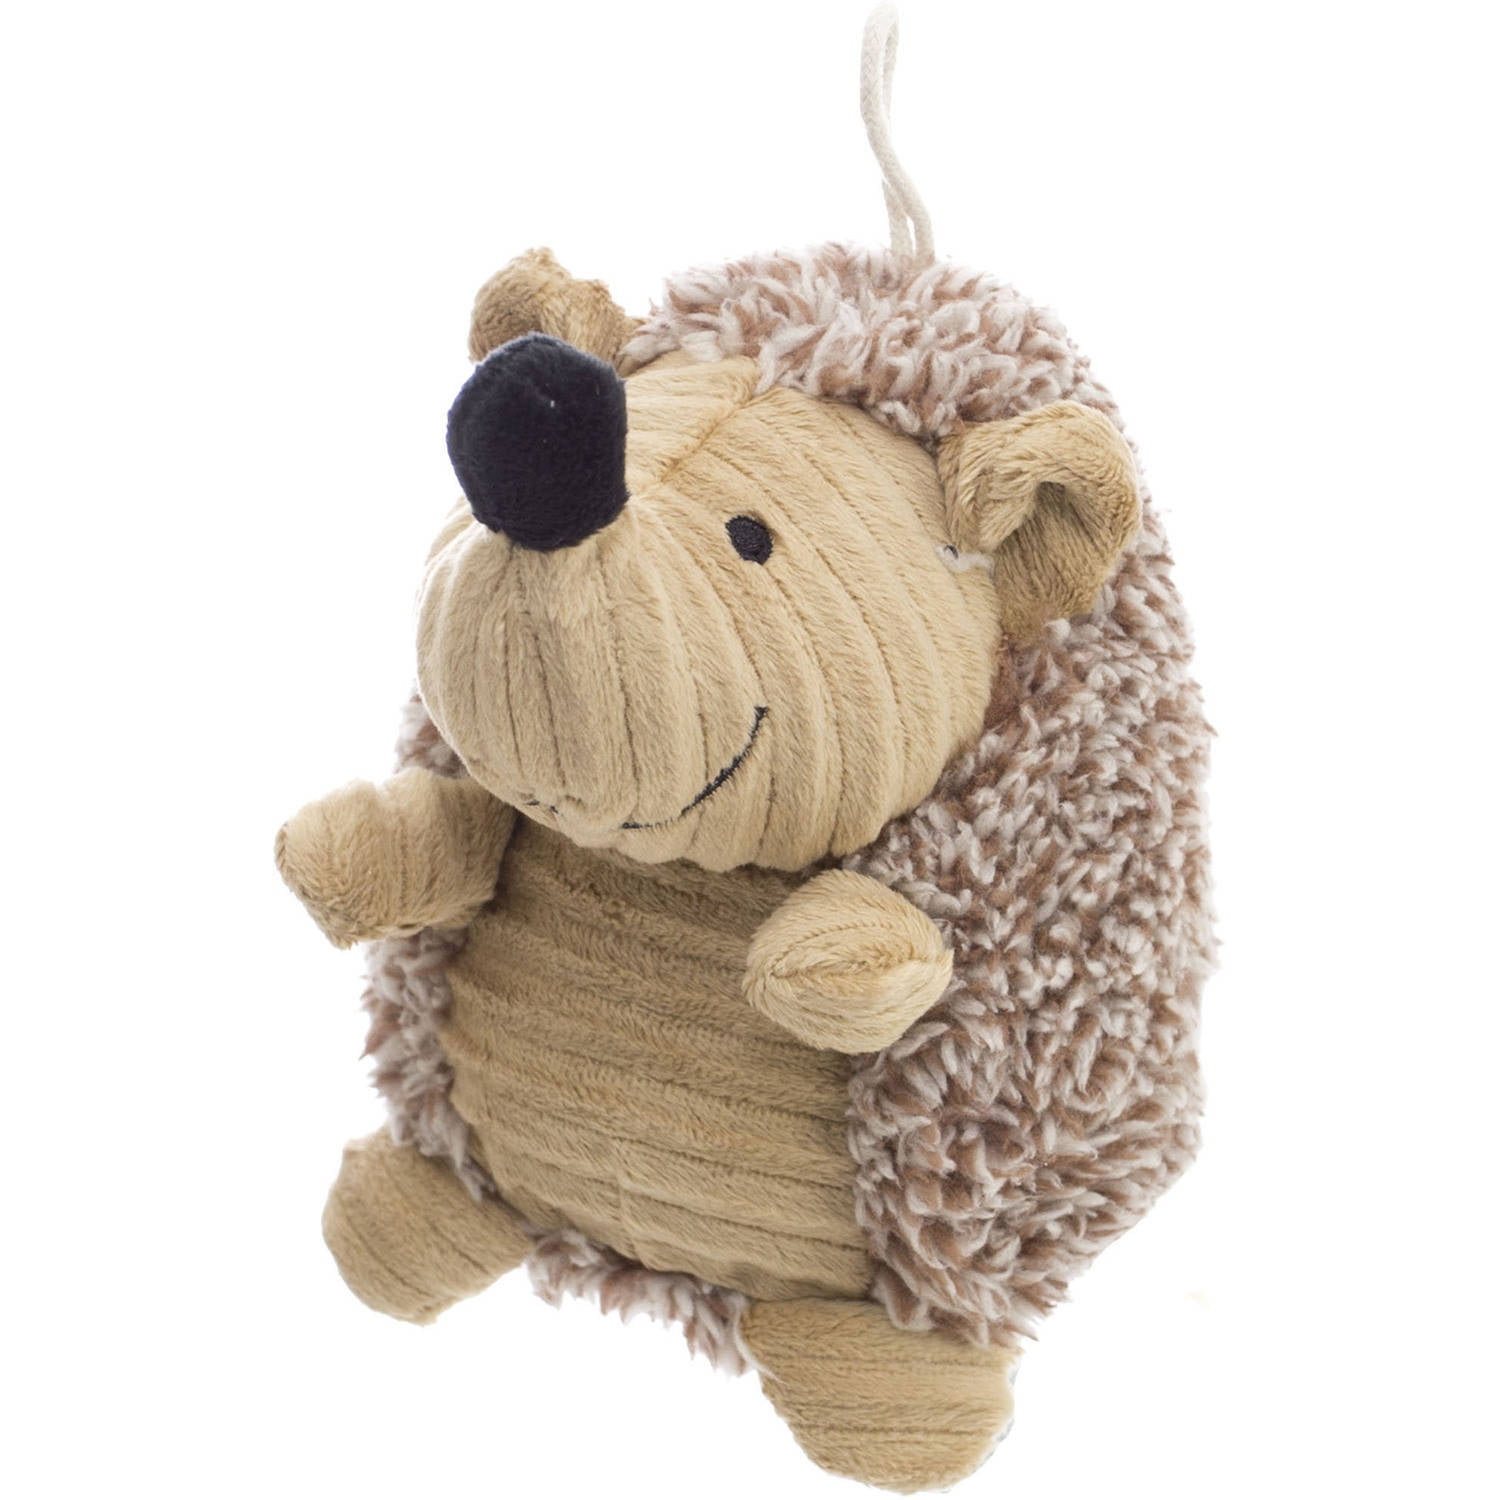 6-inch Squeaky Plush Dog Toy - Hedgehog 